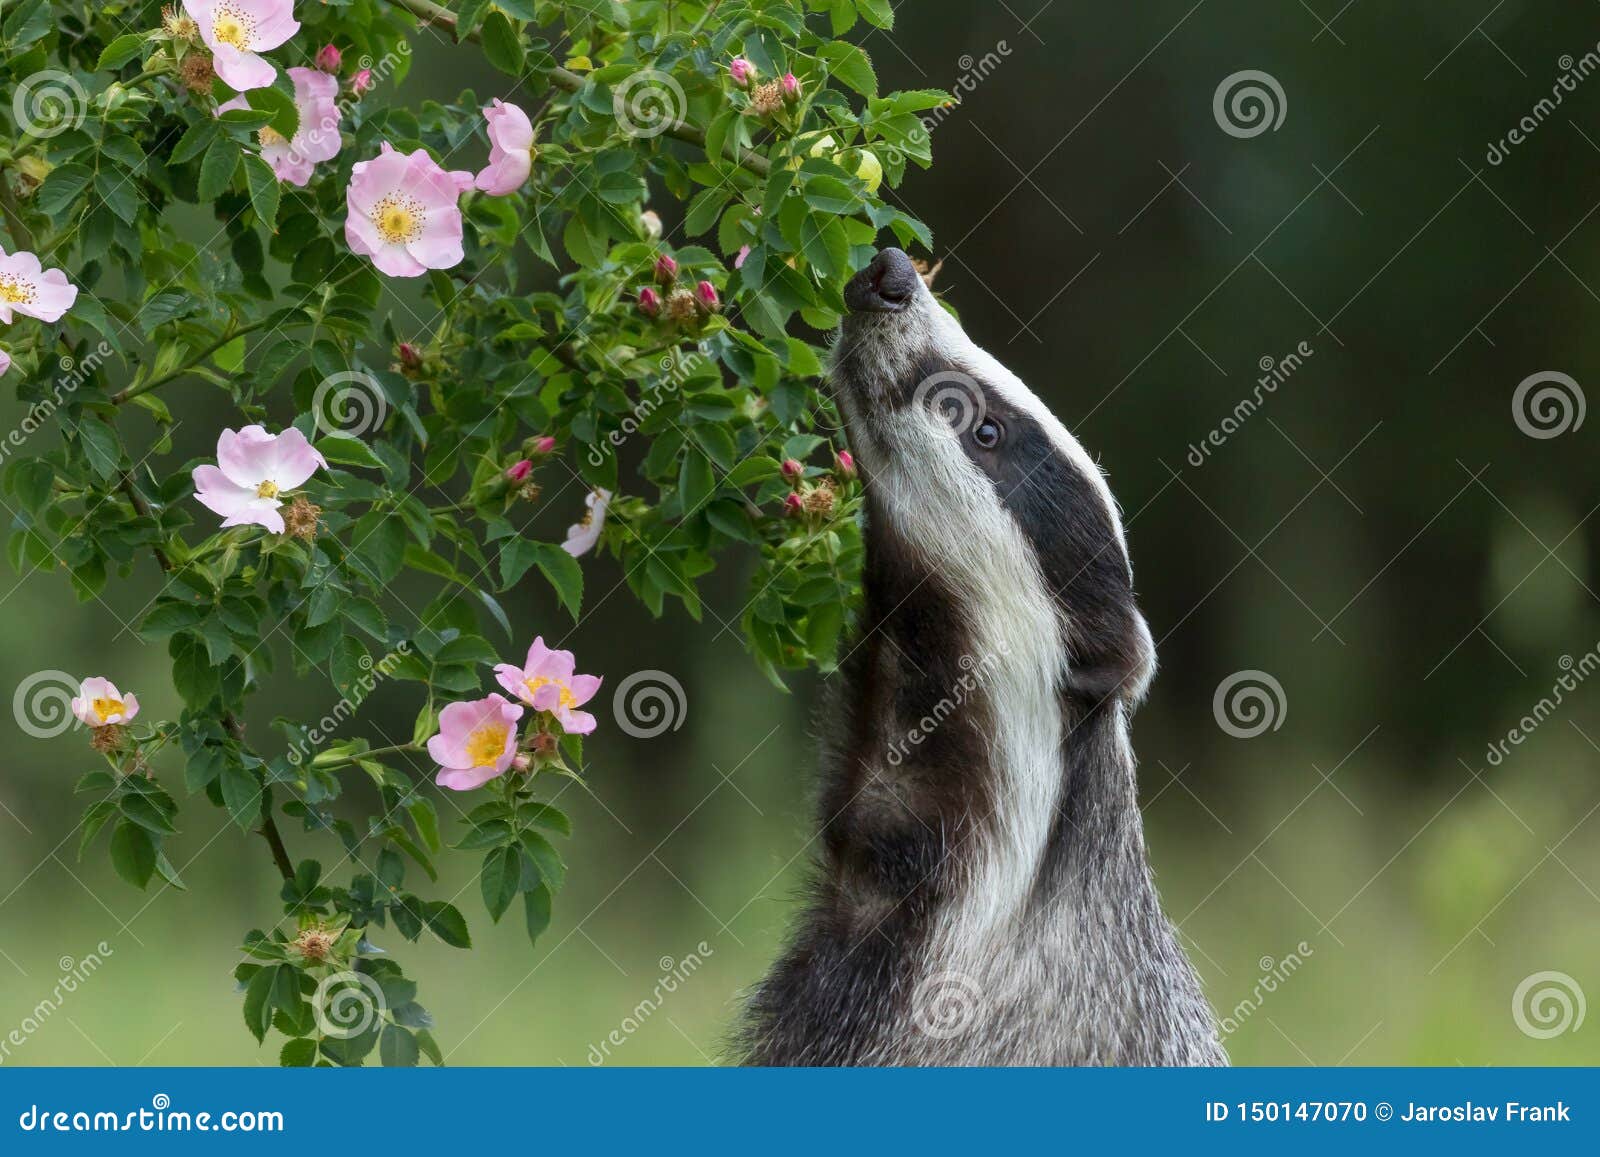 european badger is sniffing a wild rose flower